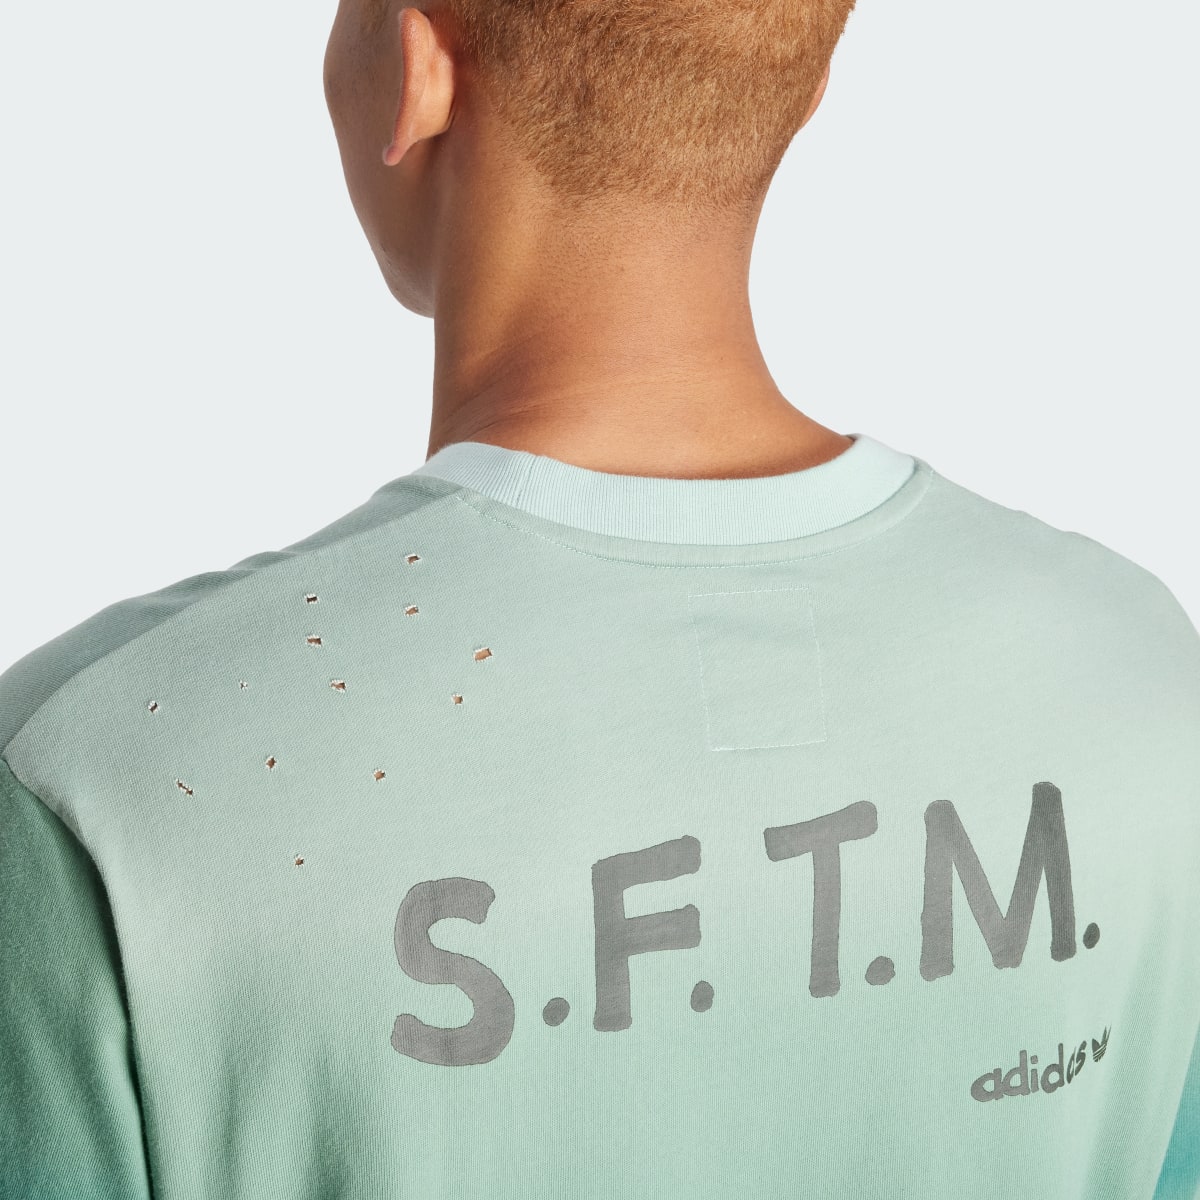 Adidas SFTM T-Shirt (Gender Neutral). 7